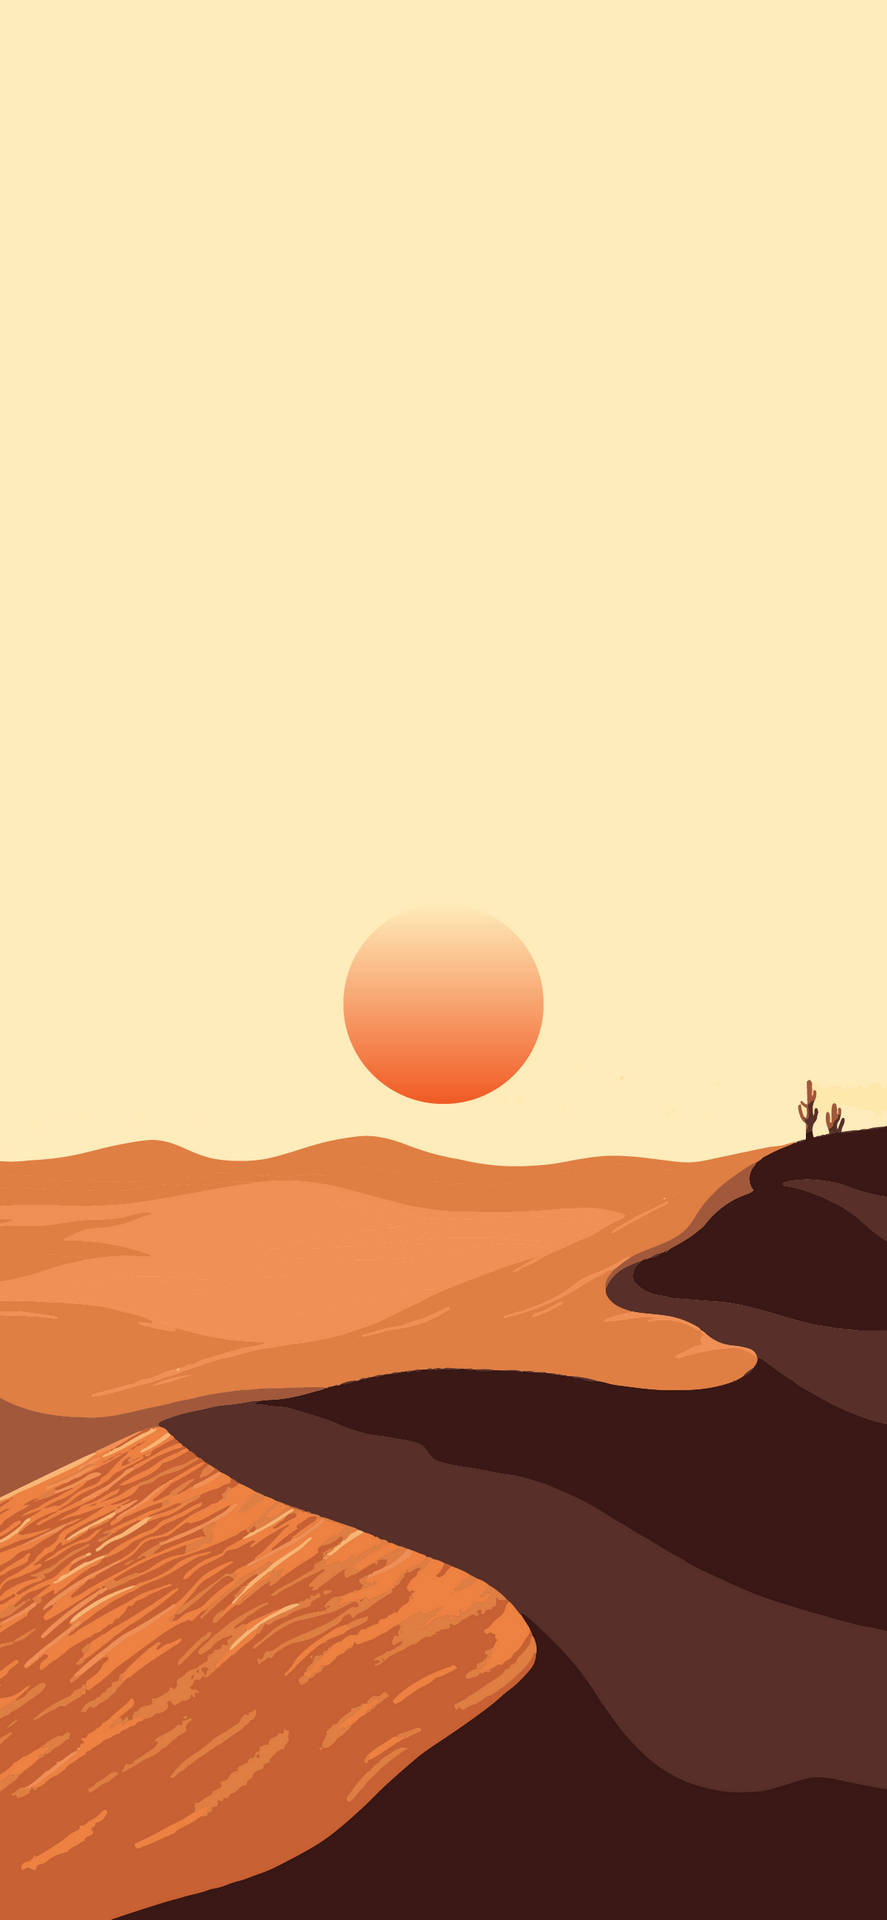 Shadowy Desert Sun Background